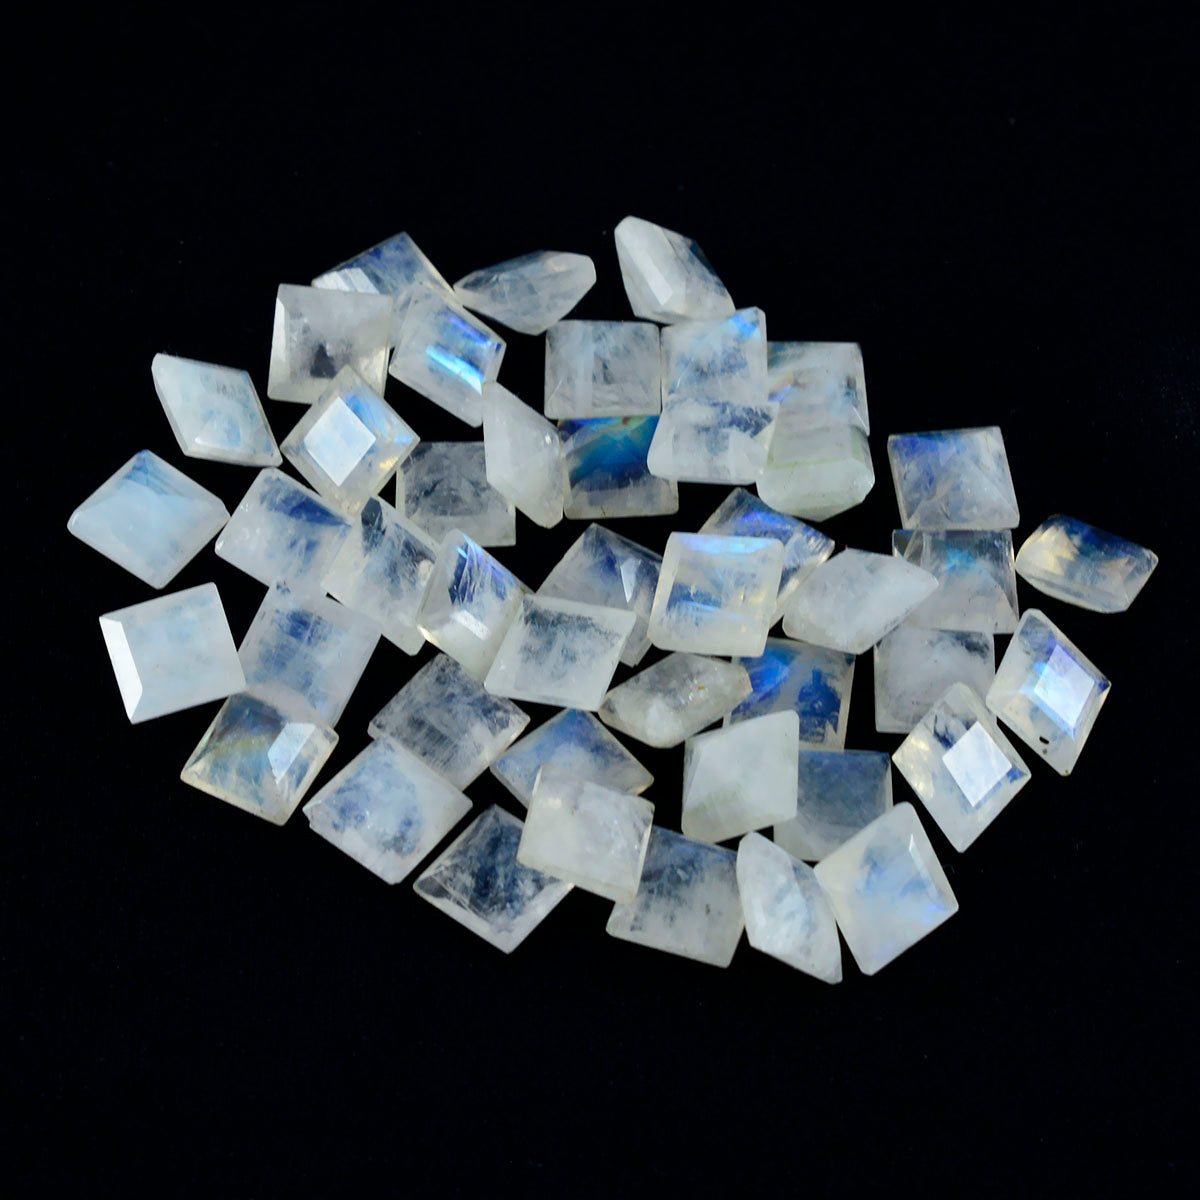 Riyogems 1PC White Rainbow Moonstone Faceted 4x4 mm Square Shape A+ Quality Loose Gems